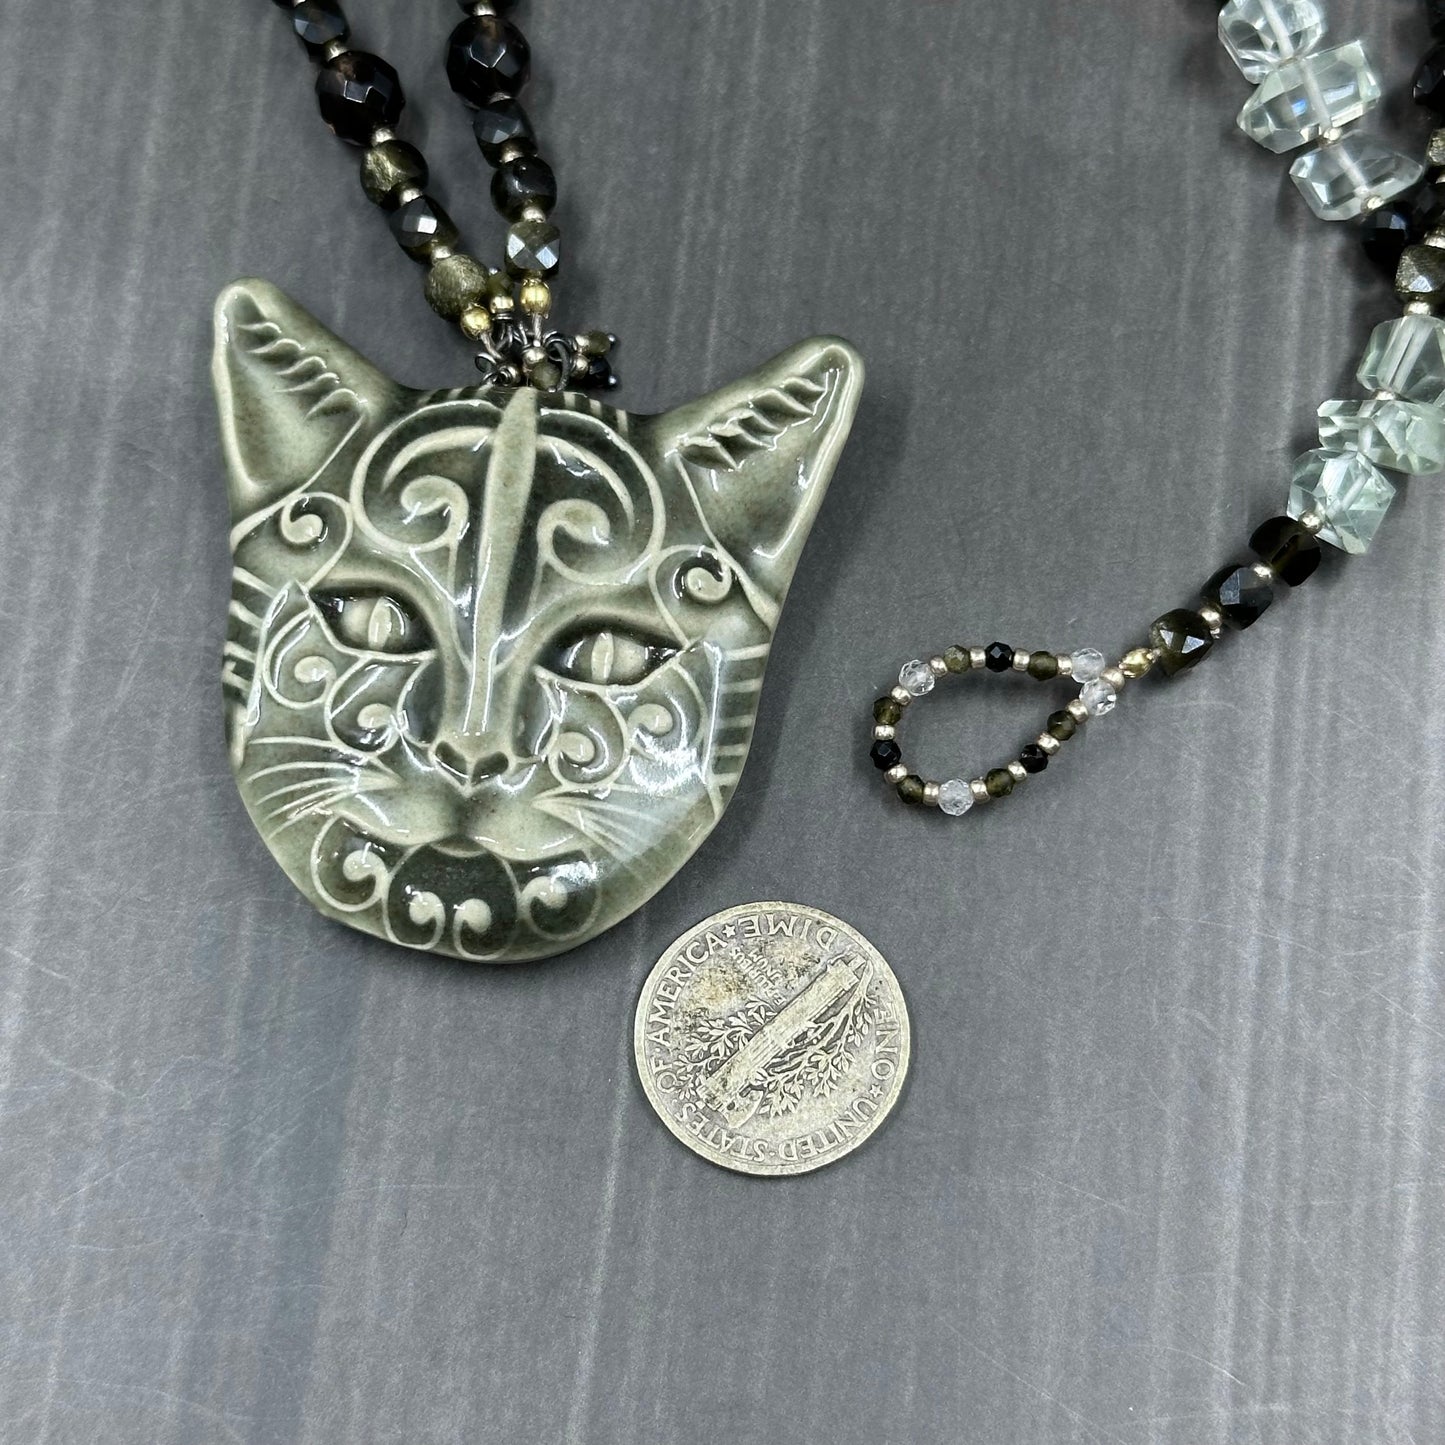 Ceramic Cat Necklace with Golden Obsidian, Smoky Quartz, Quartz, and Praisolite